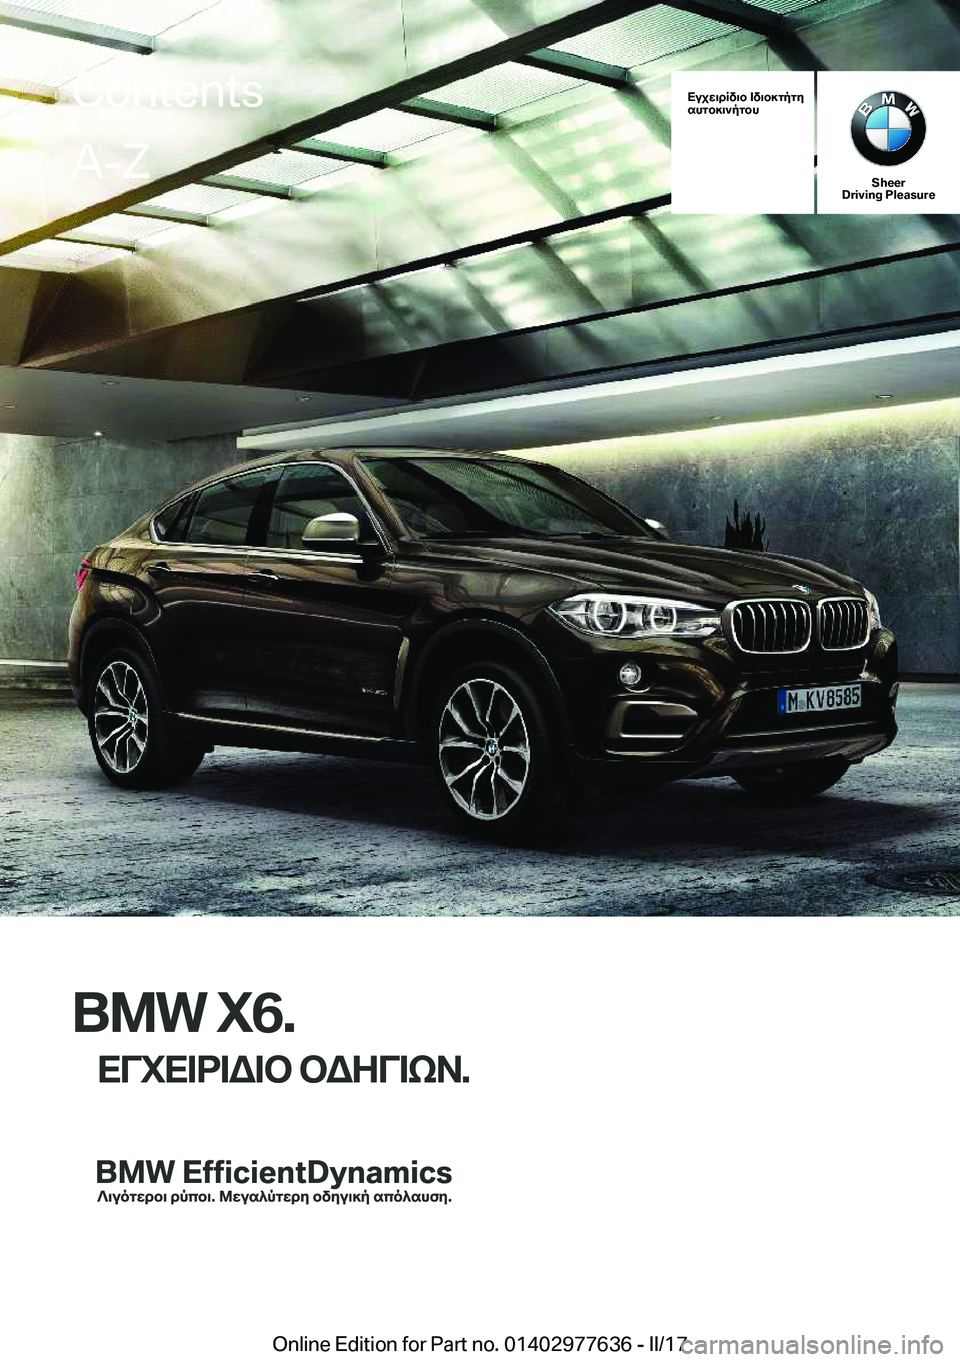 BMW X6 2017  ΟΔΗΓΌΣ ΧΡΉΣΗΣ (in Greek) Xujw\dRv\b�=v\b]gpgy
shgb]\`pgbh
�S�h�e�e�r
�D�r�i�v�i�n�g��P�l�e�a�s�u�r�e
�B�M�W��X�6�.
XViX=d=W=b�bW;V=kA�.
�C�o�n�t�e�n�t�s�A�-�Z
�O�n�l�i�n�e� �